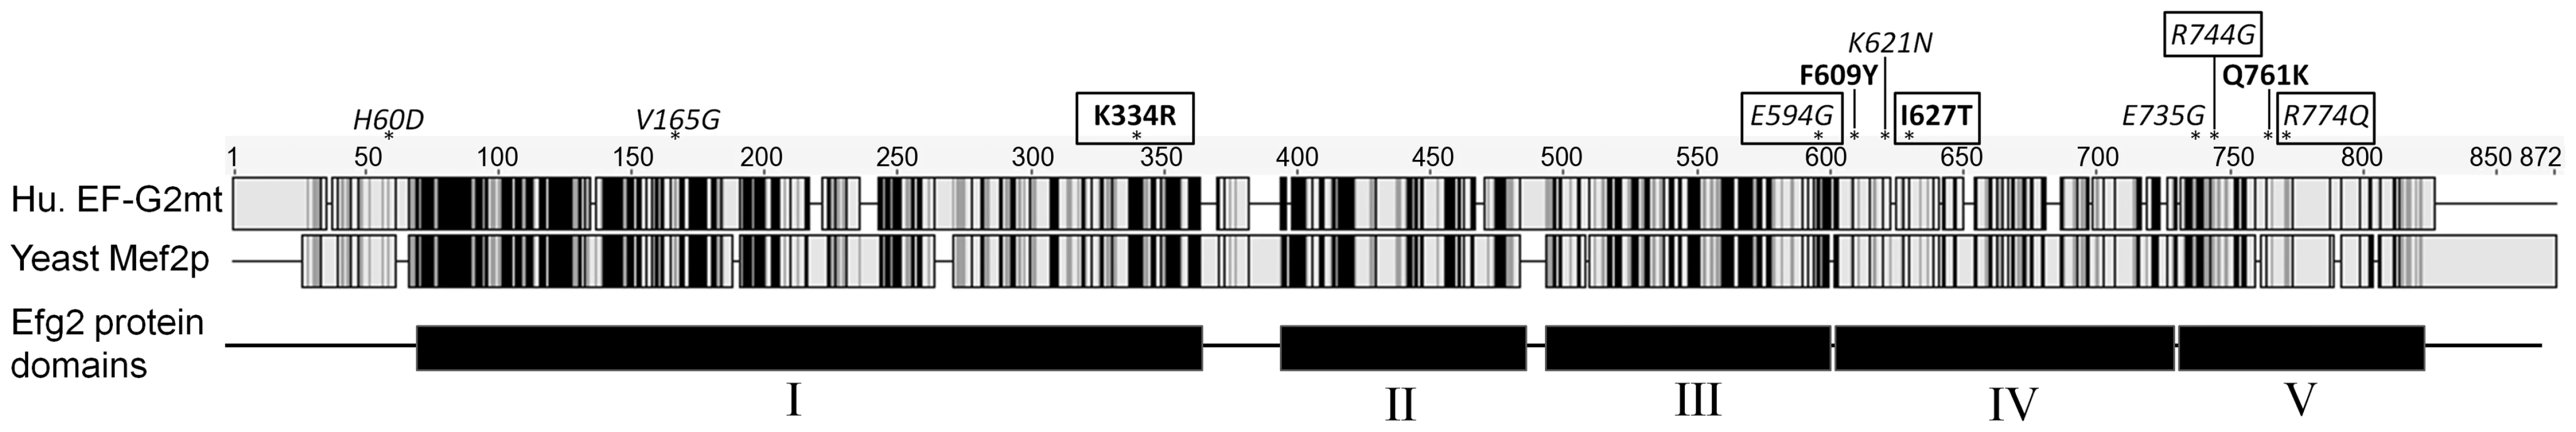 EF-G2mt protein variants.